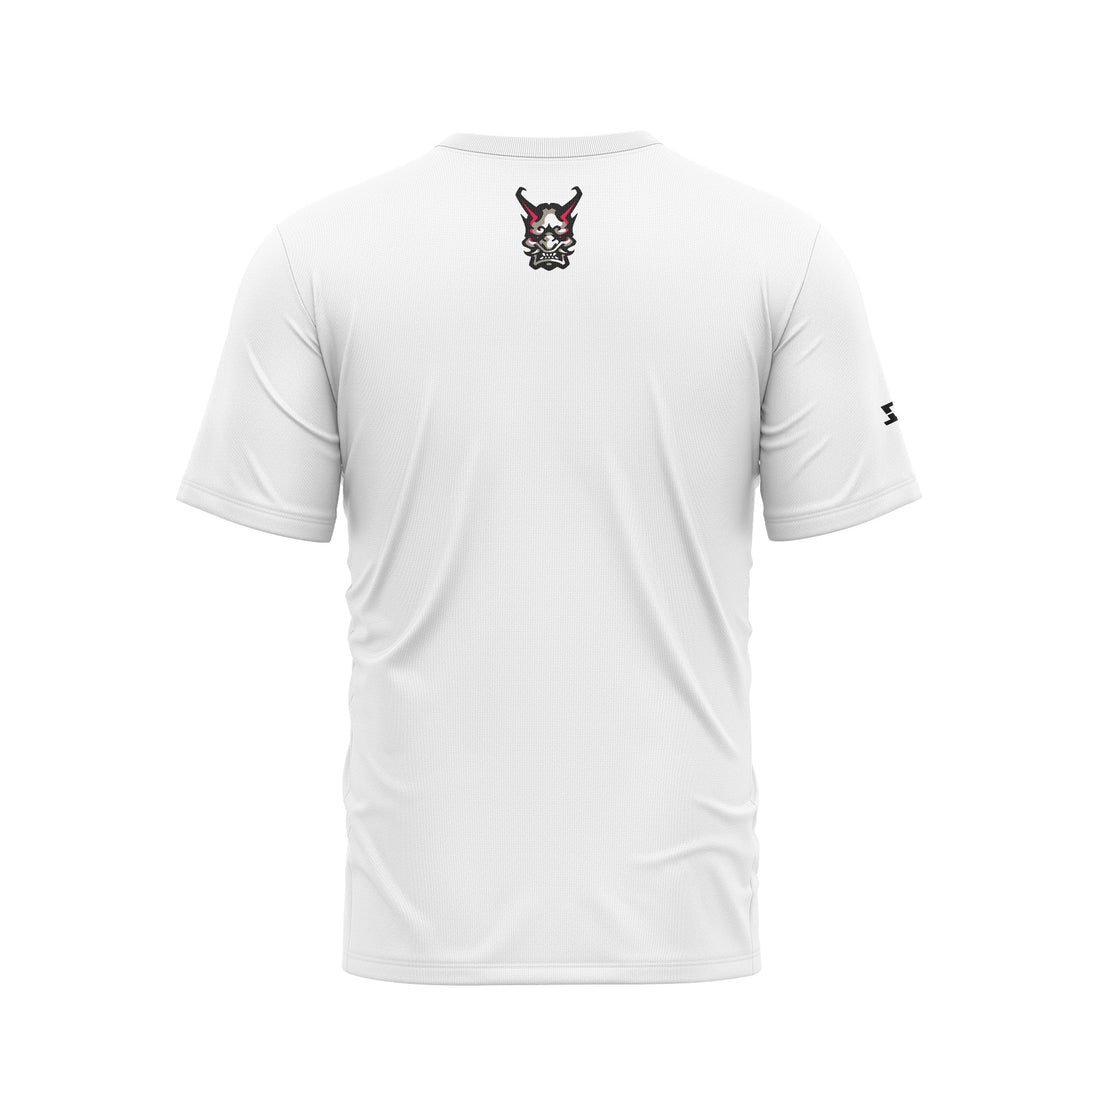 Oni Warriors Logo Shirt